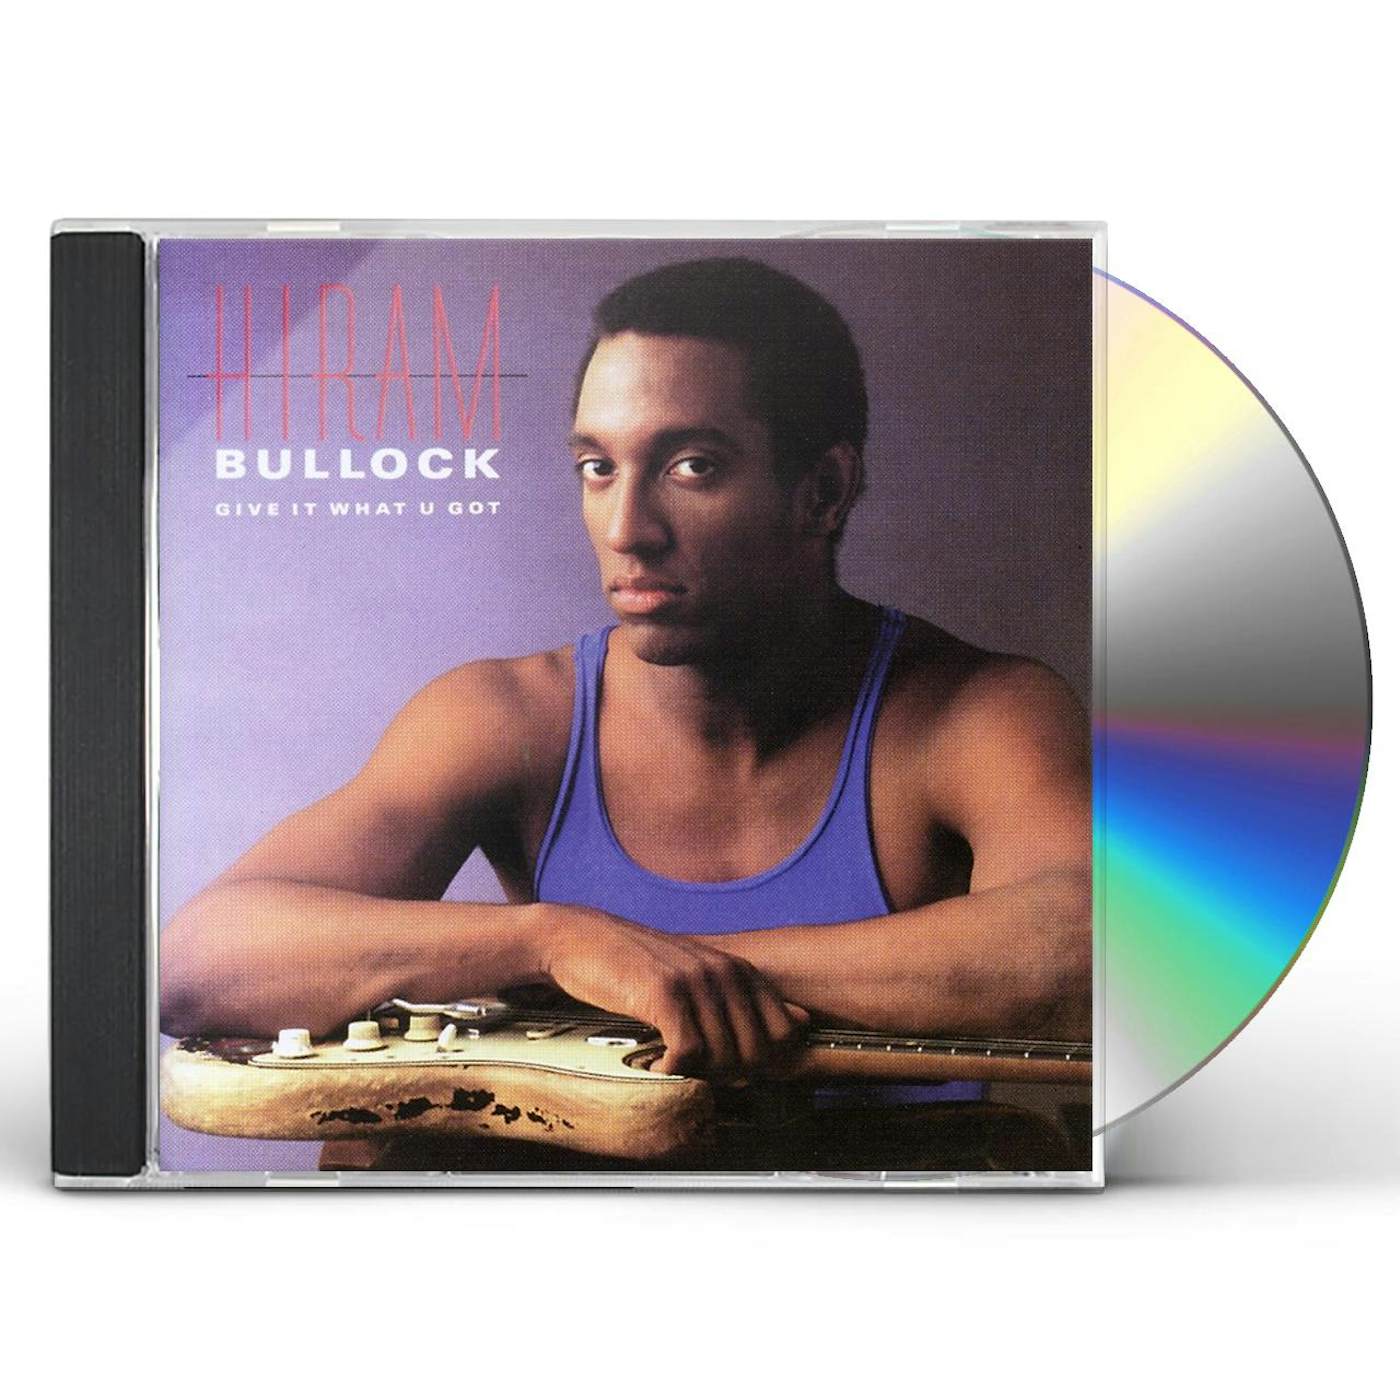 Hiram Bullock GIVE IT WHAT U WANT CD